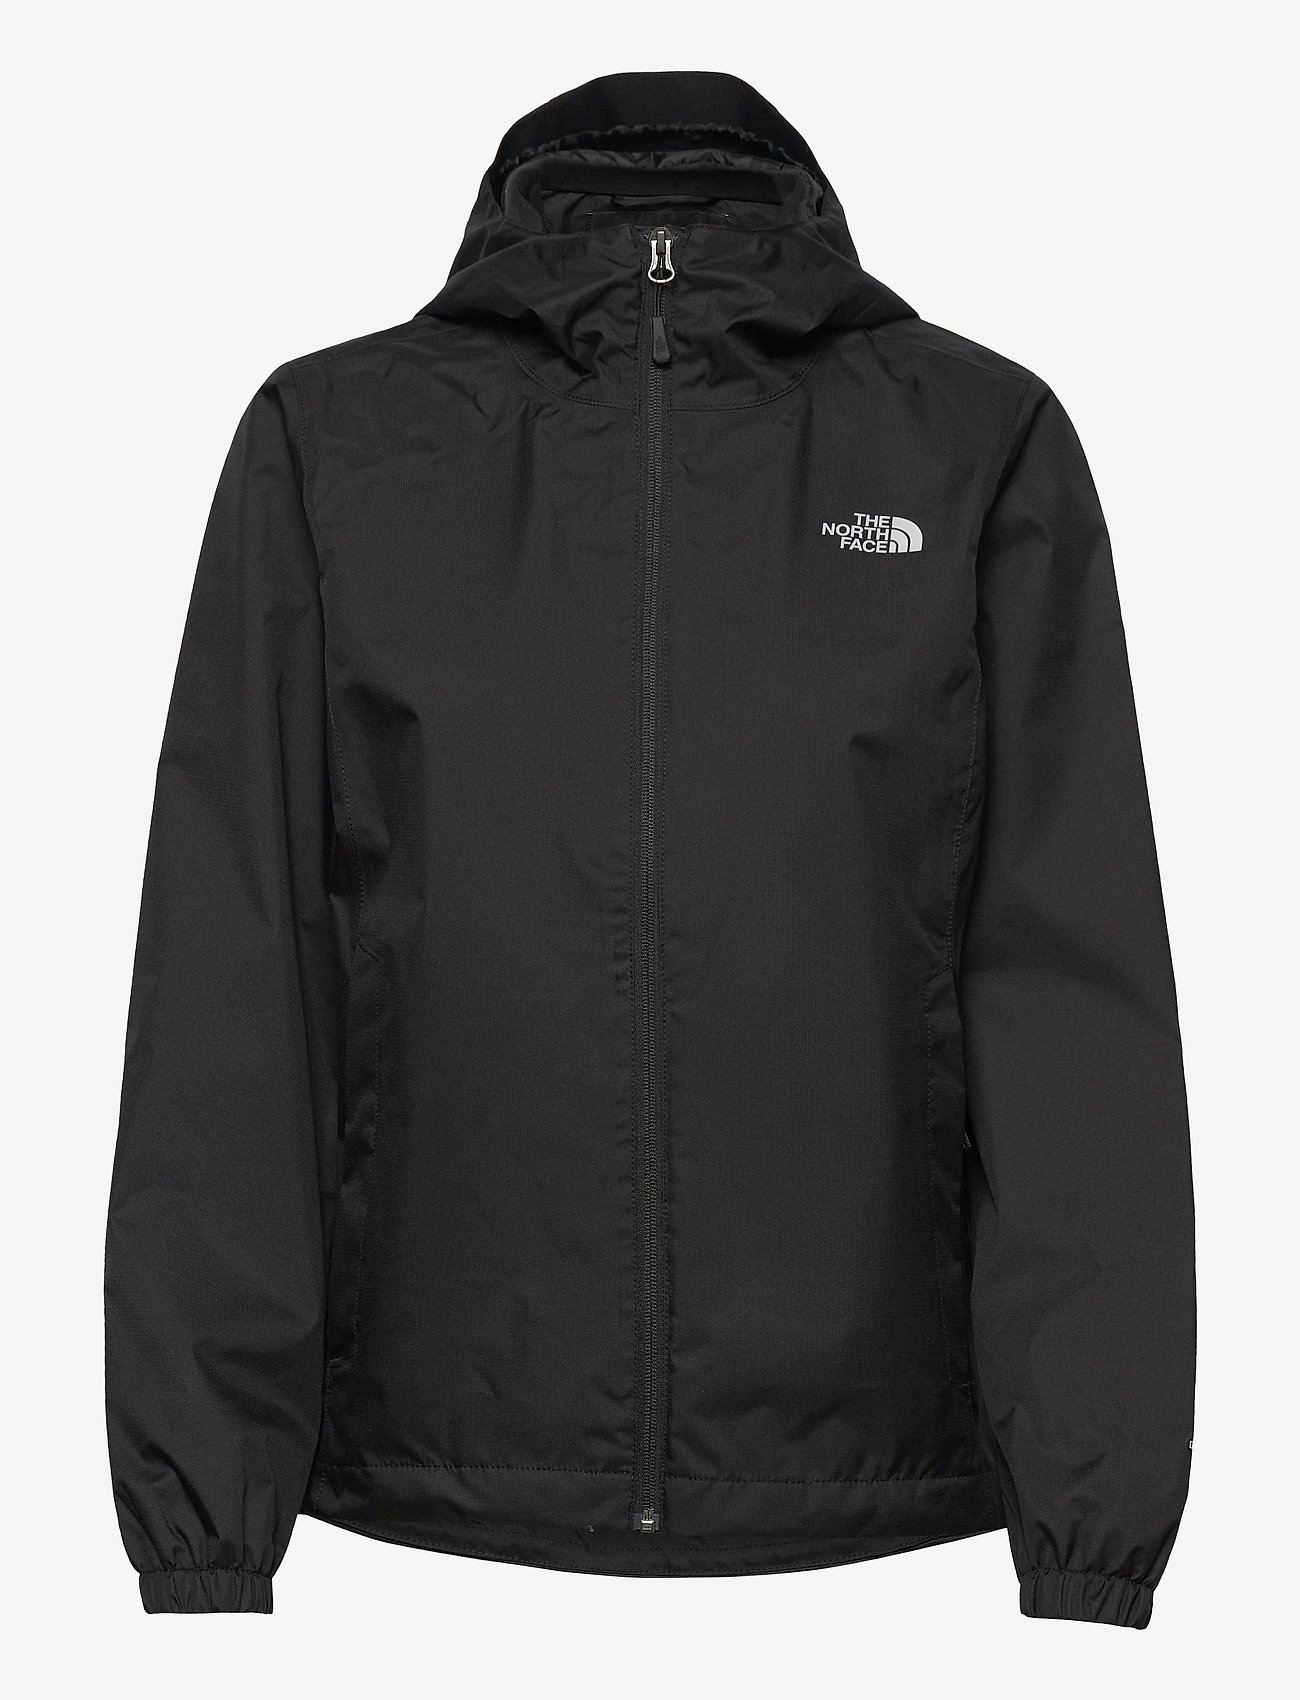 The North Face - W QUEST JACKET - EU - sports jackets - tnf black/foil grey - 0